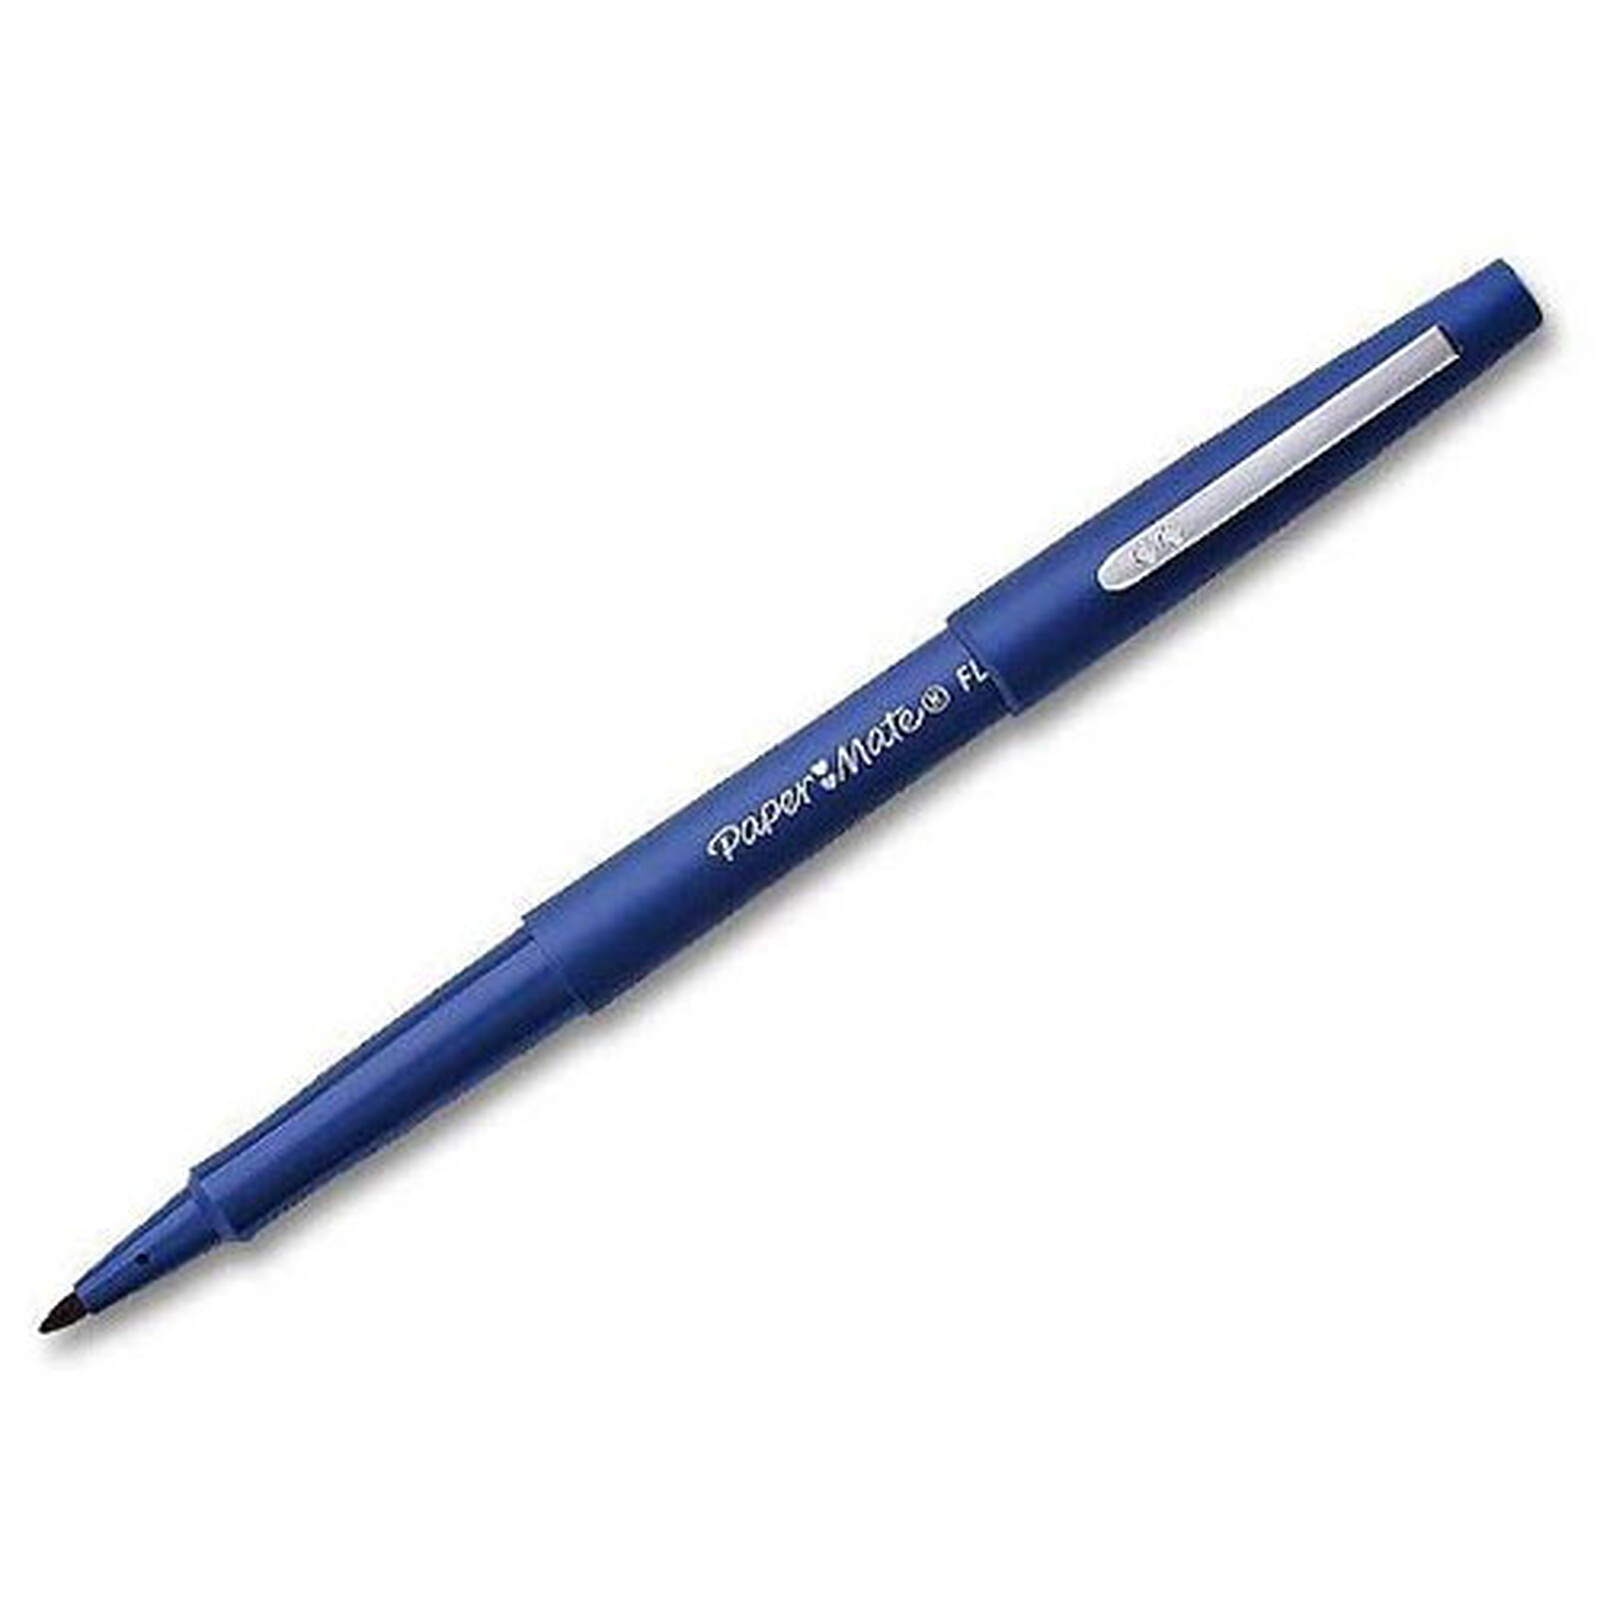 PAPERMATE Flair blue felt-tip pen - Pen - LDLC 3-year warranty